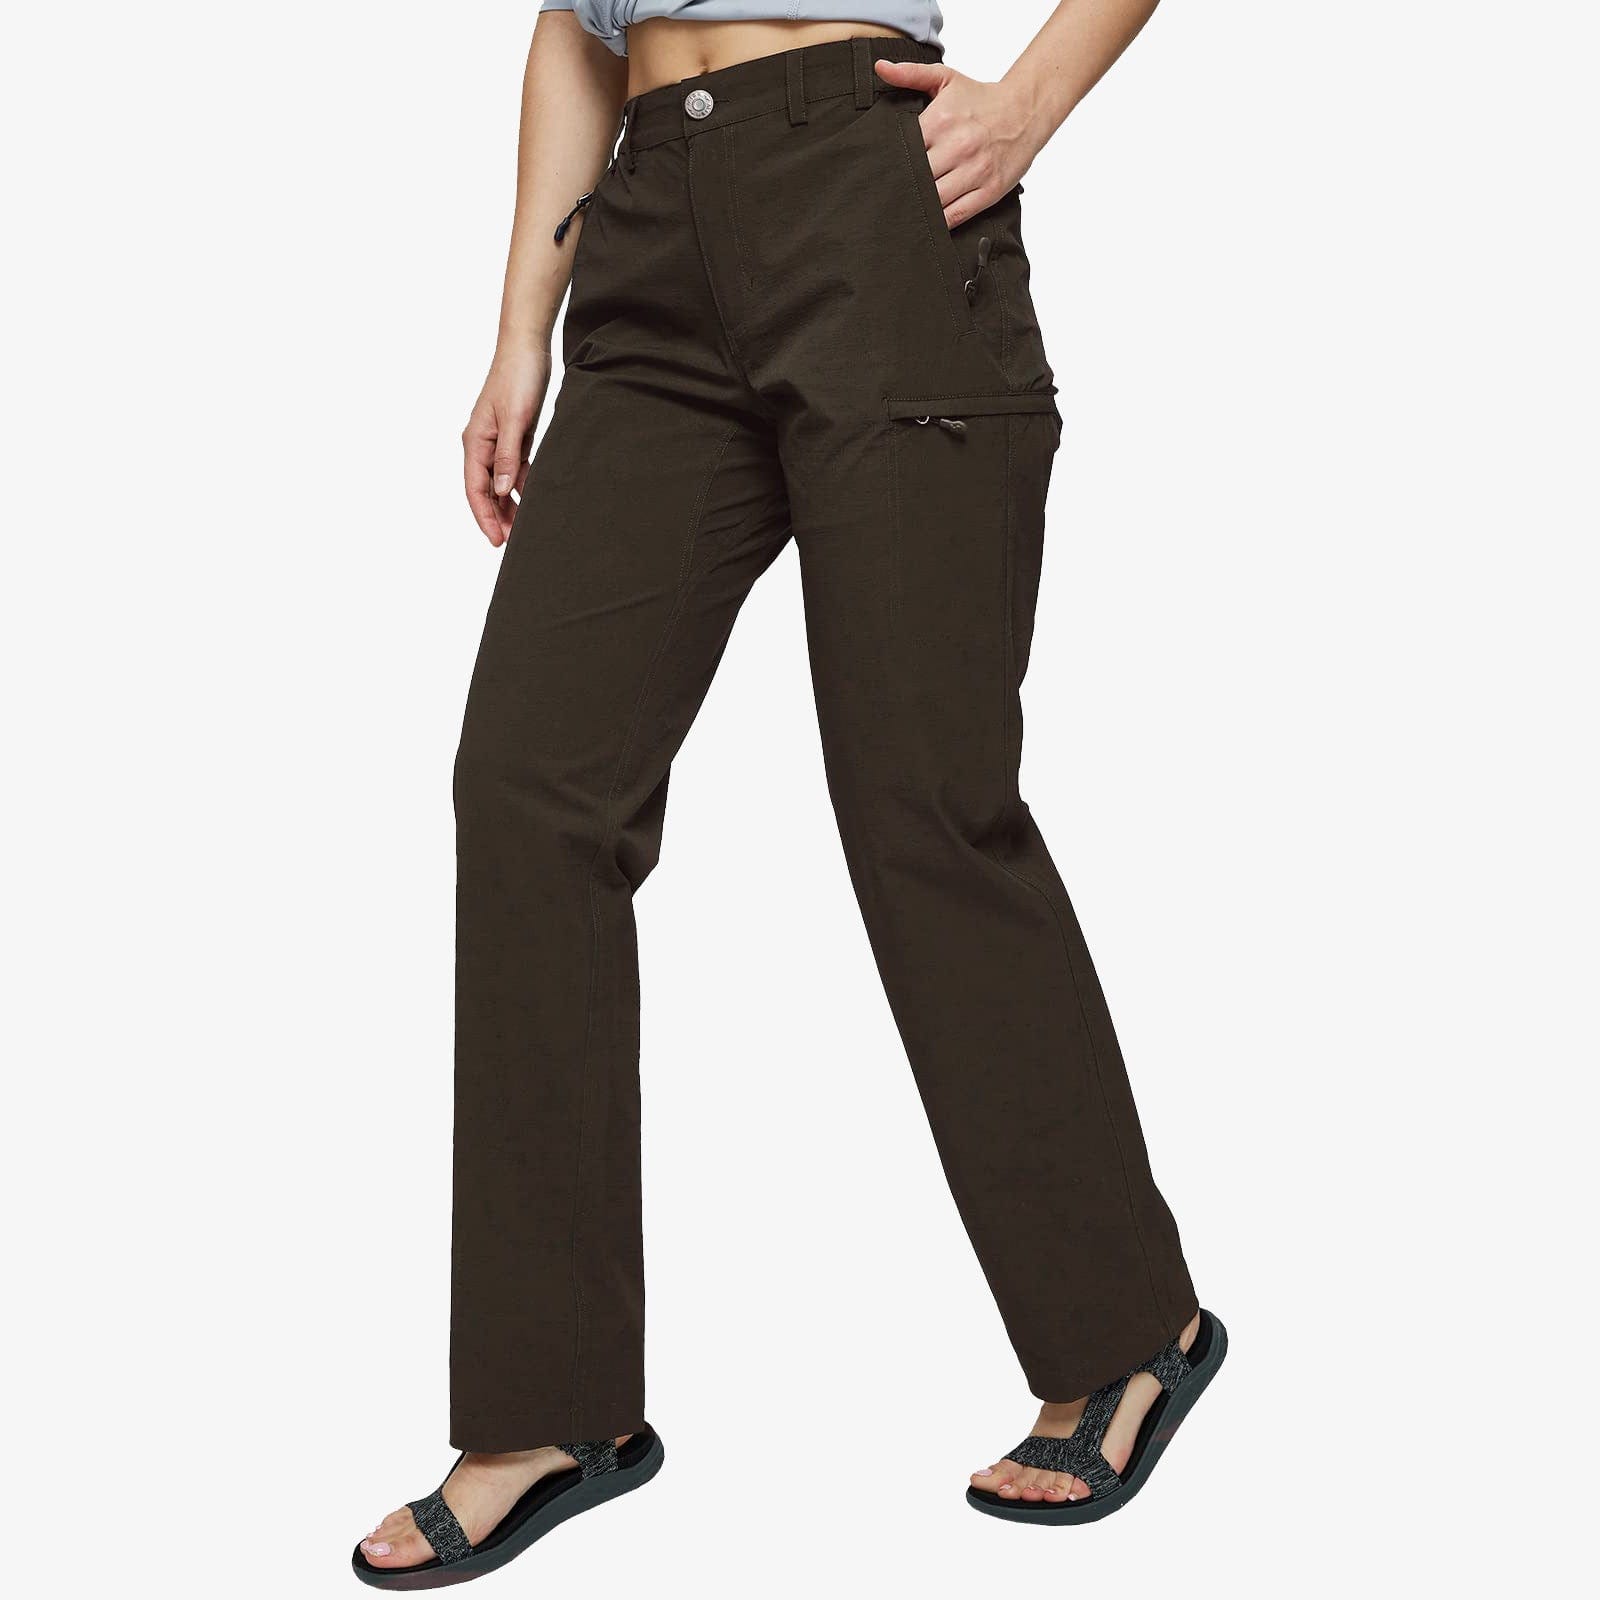 MIER Women Quick Dry Cargo Pants Tactical Hiking Pants